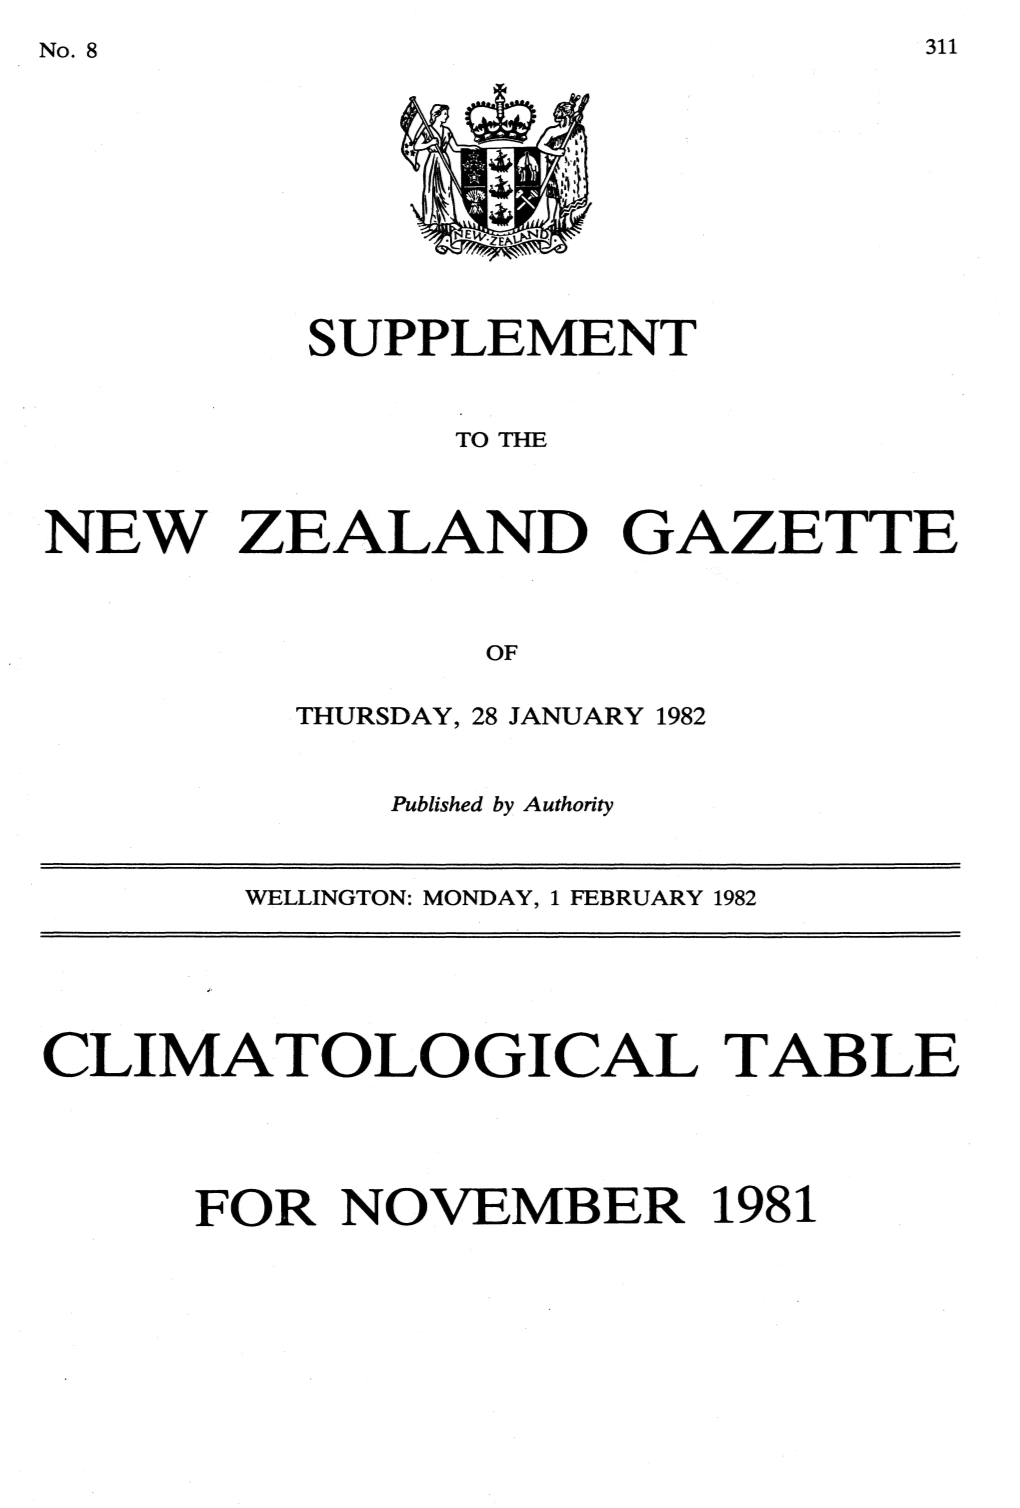 New Zealand Gazette Climatological Table